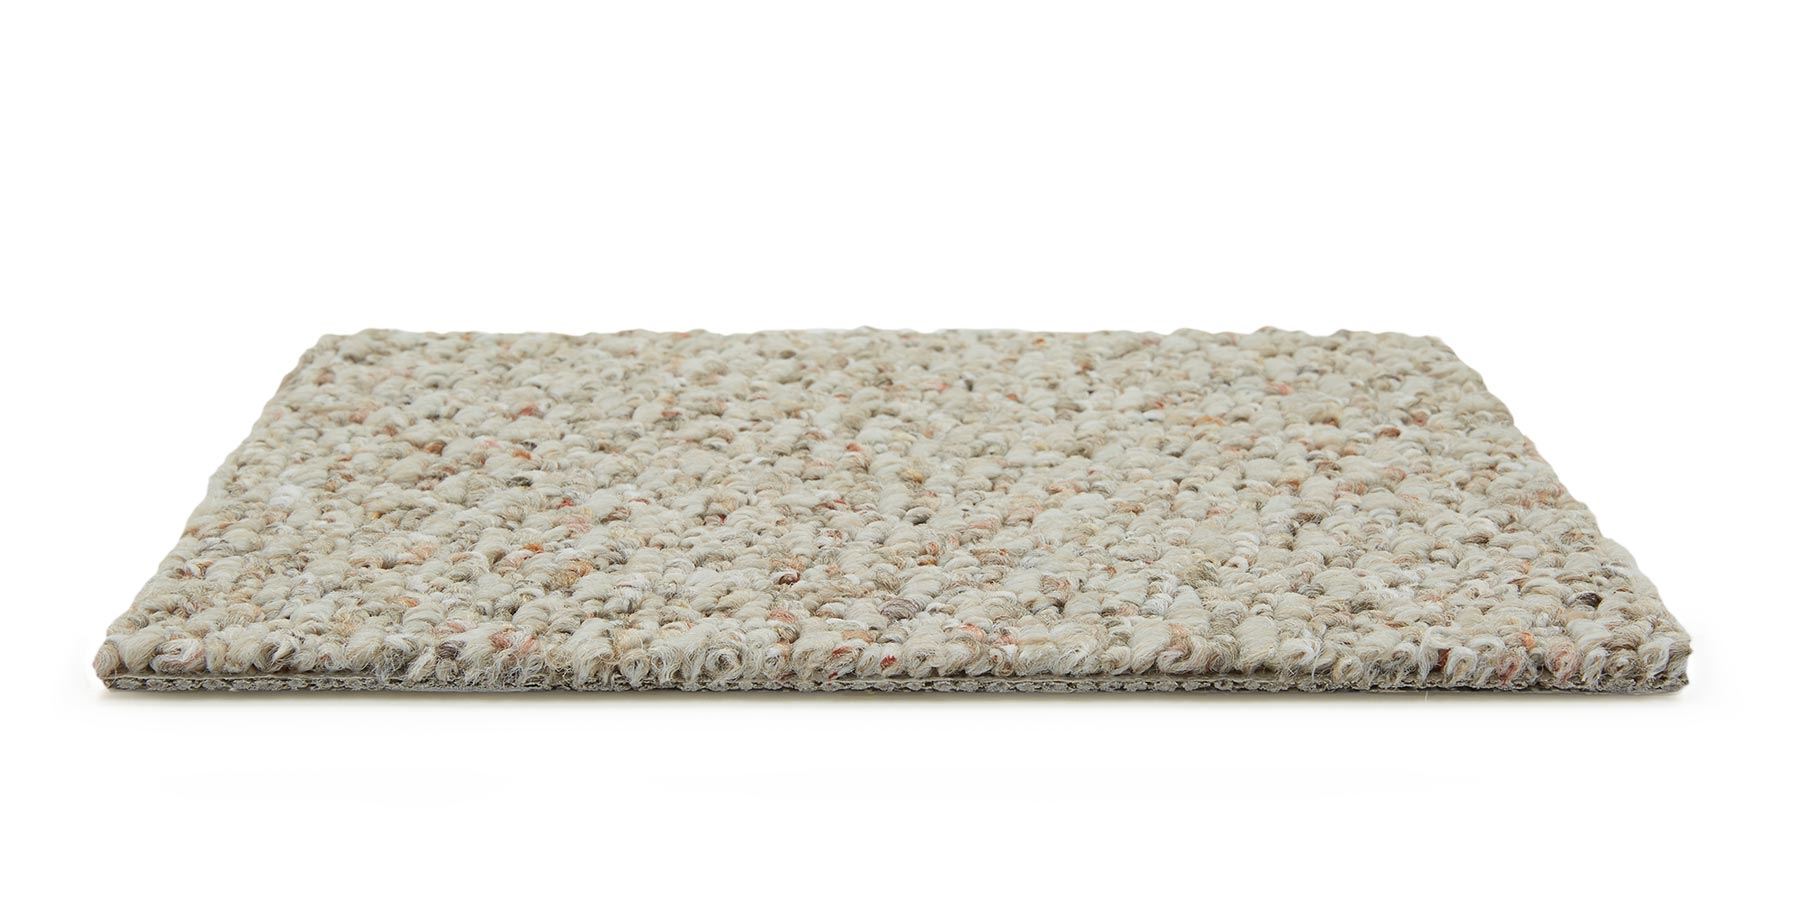 Trenton Berber Carpet